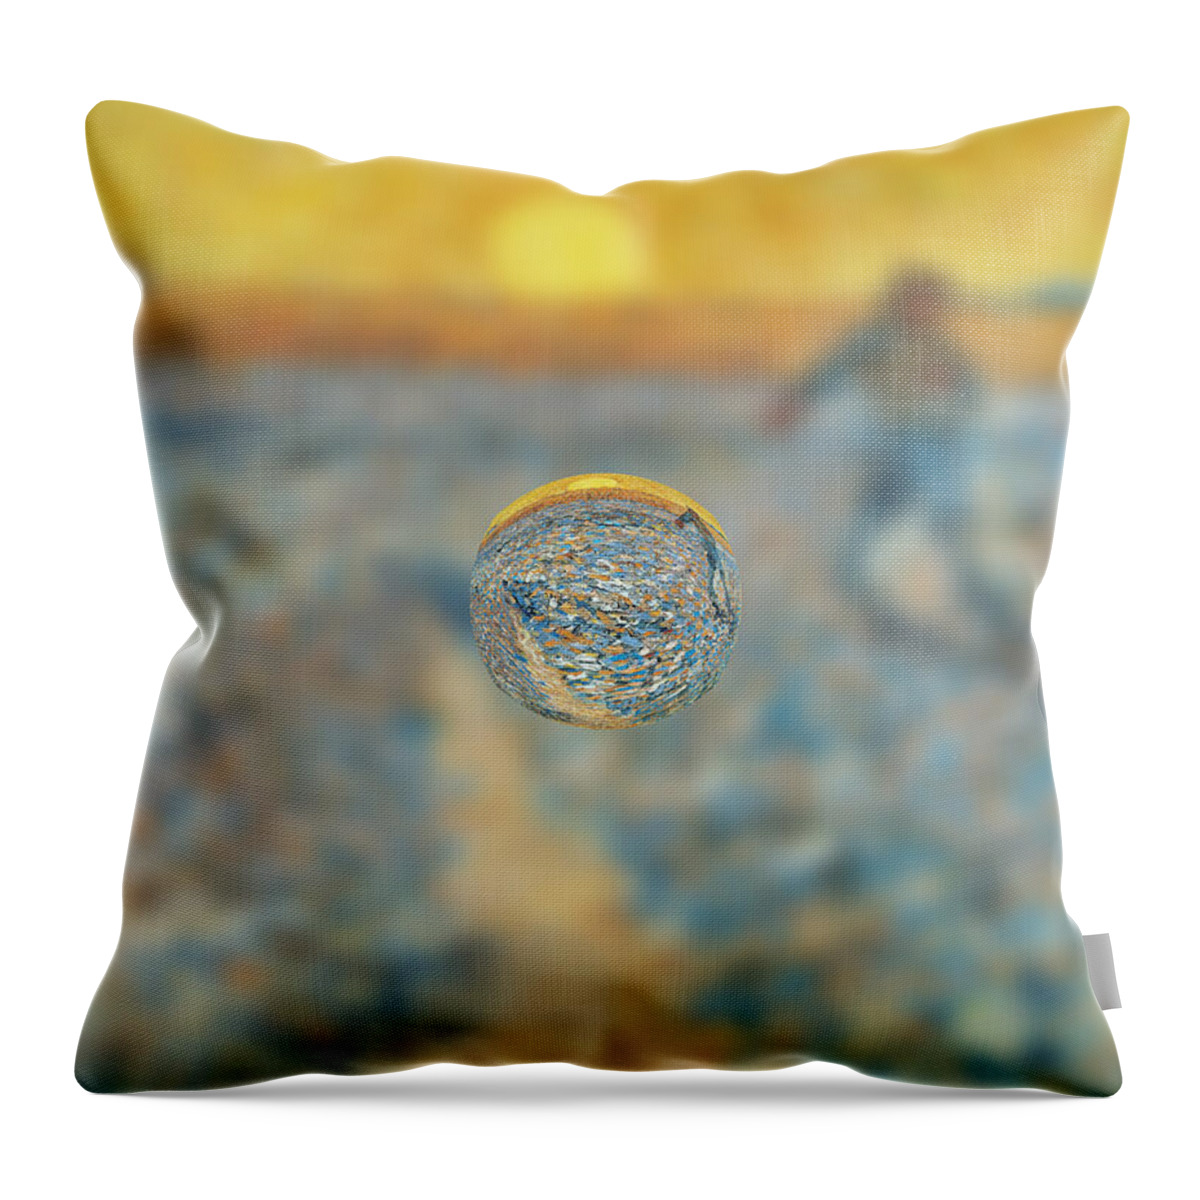 Post Modern Throw Pillow featuring the digital art Sphere 12 van Gogh by David Bridburg